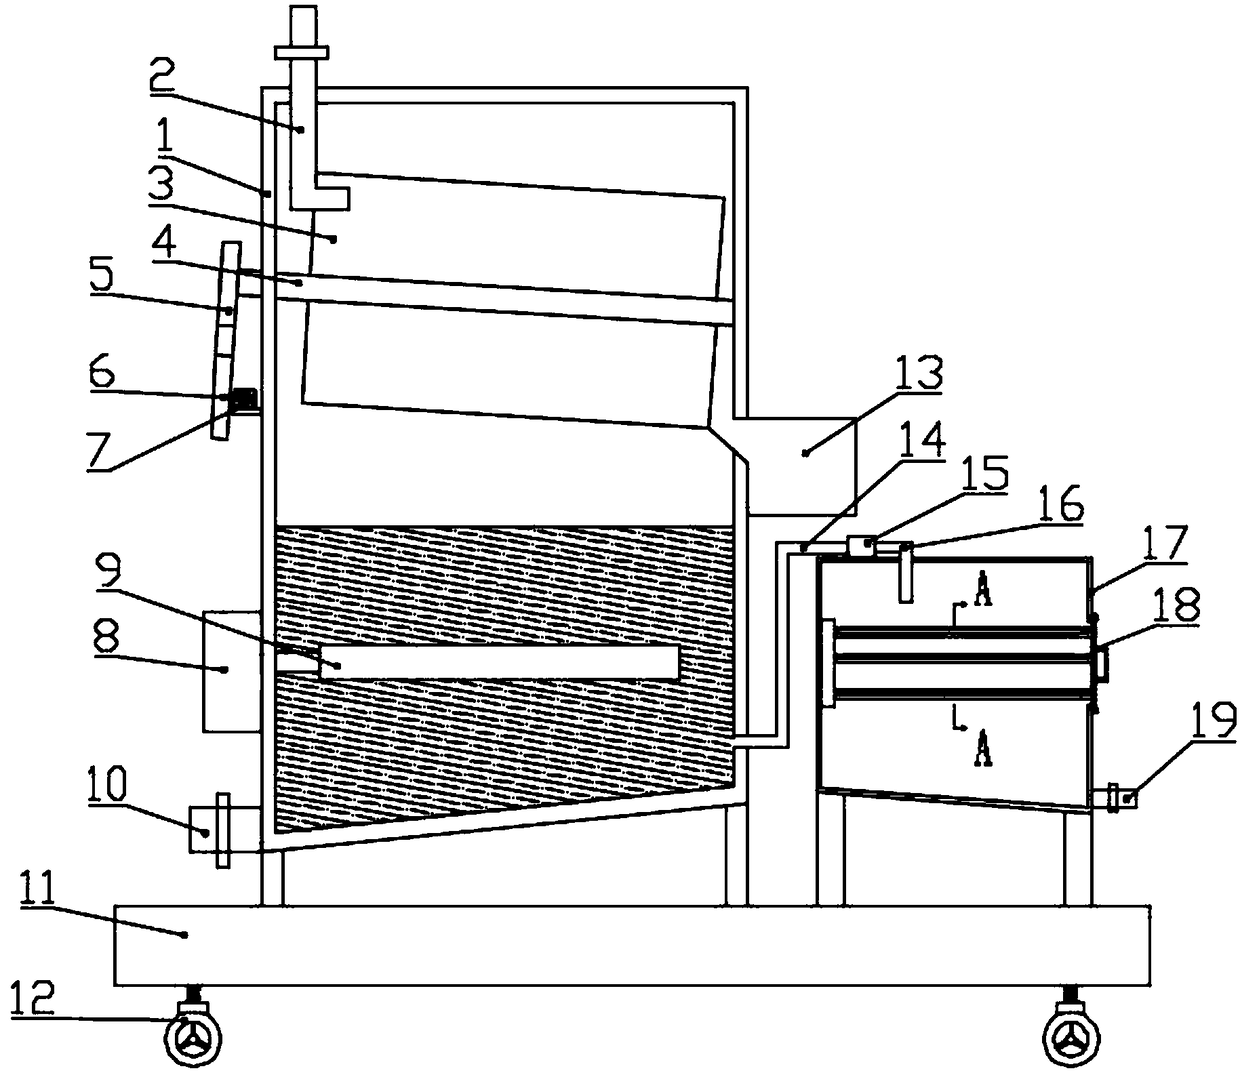 Solid-liquid separation type domestic sewage treatment device